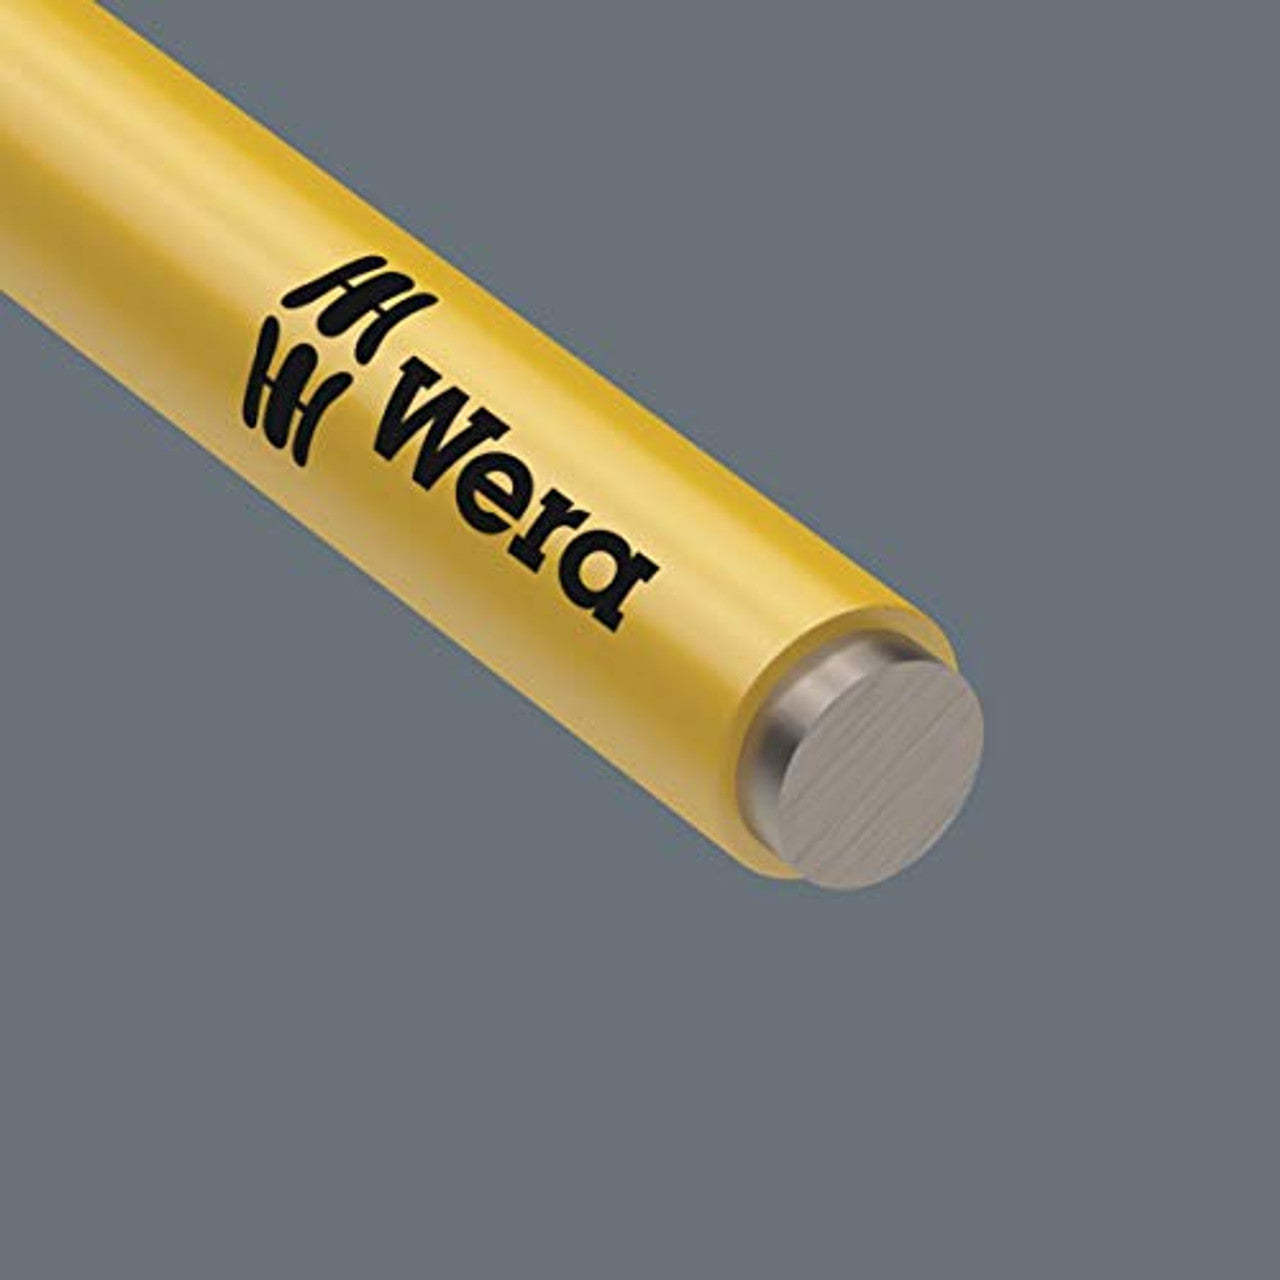 Wera 05022669001 L-Key Set 3950 Spkl/9 SM Metric of Stainless Steel,MULTI